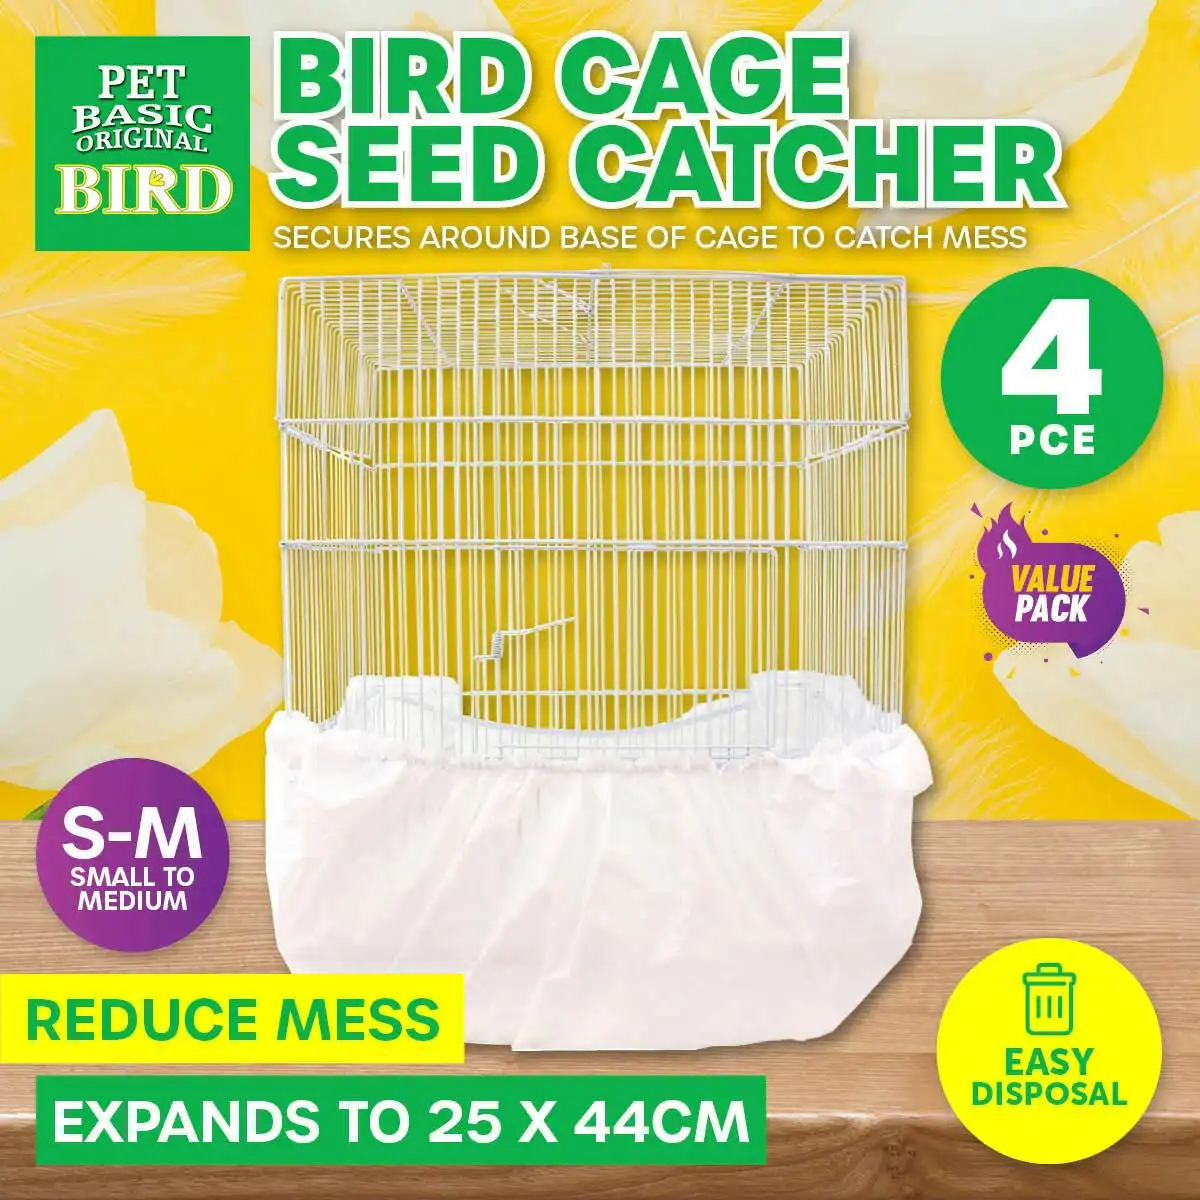 Pet Basic 4PK Bird Cage Seed Catcher Reduce Mess Reusable Disposable 25 x 44cm